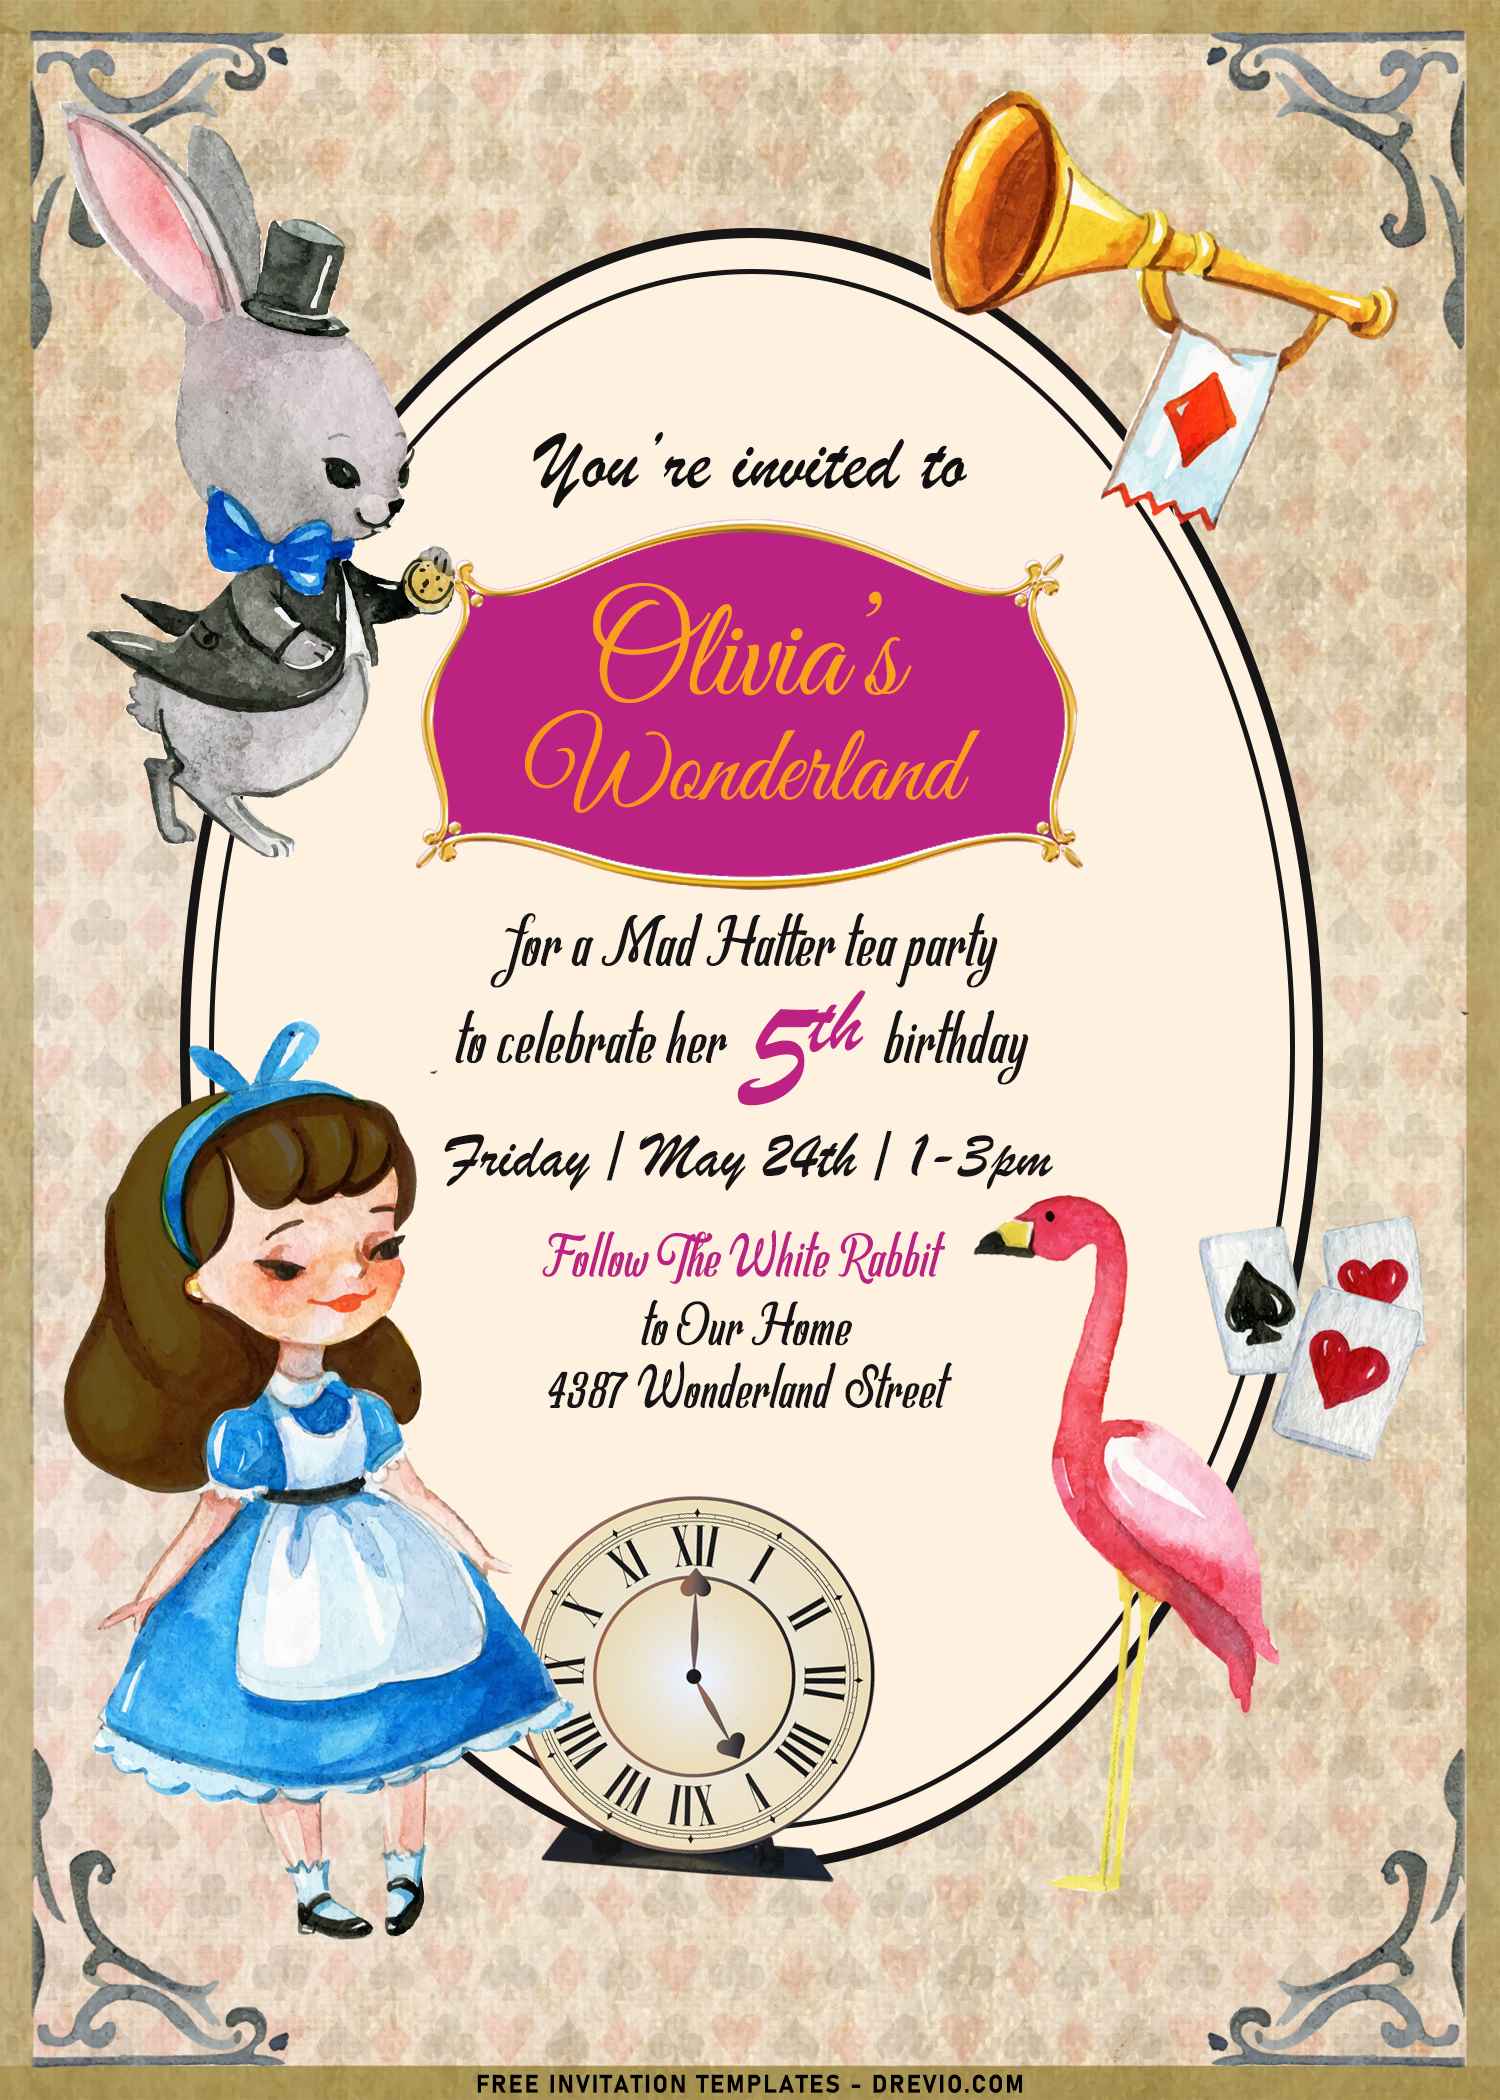 https://www.drevio.com/wp-content/uploads/2021/08/8-Vintage-Alice-In-Wonderland-Birthday-Invitation-Templates.jpg